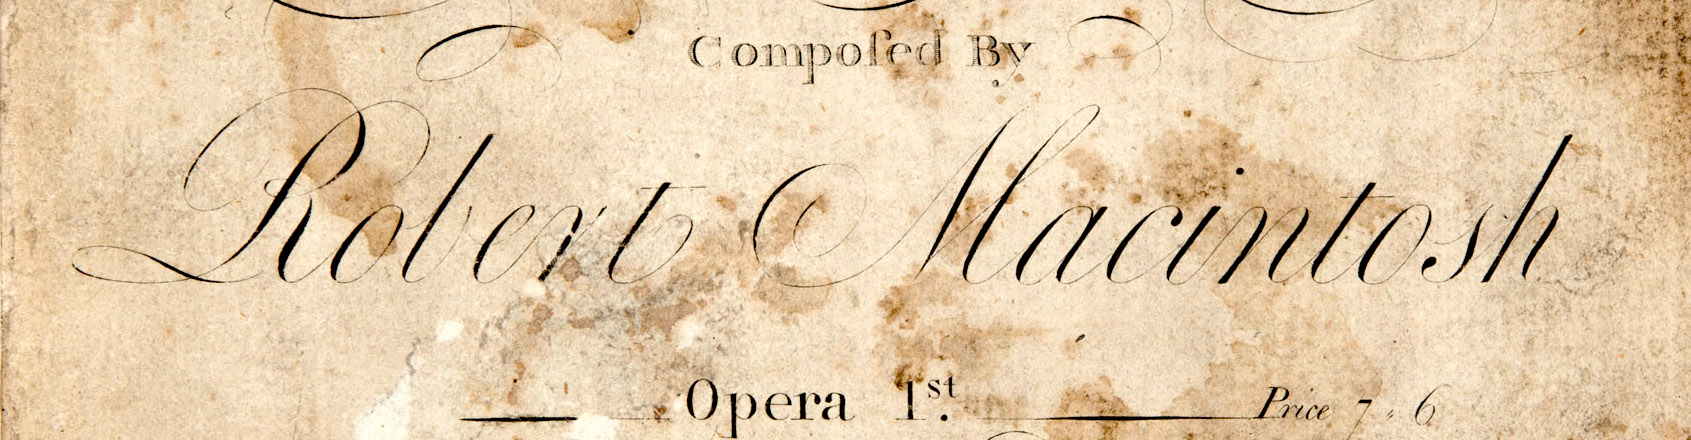 Mackintosh 1783 Title Page copy 3